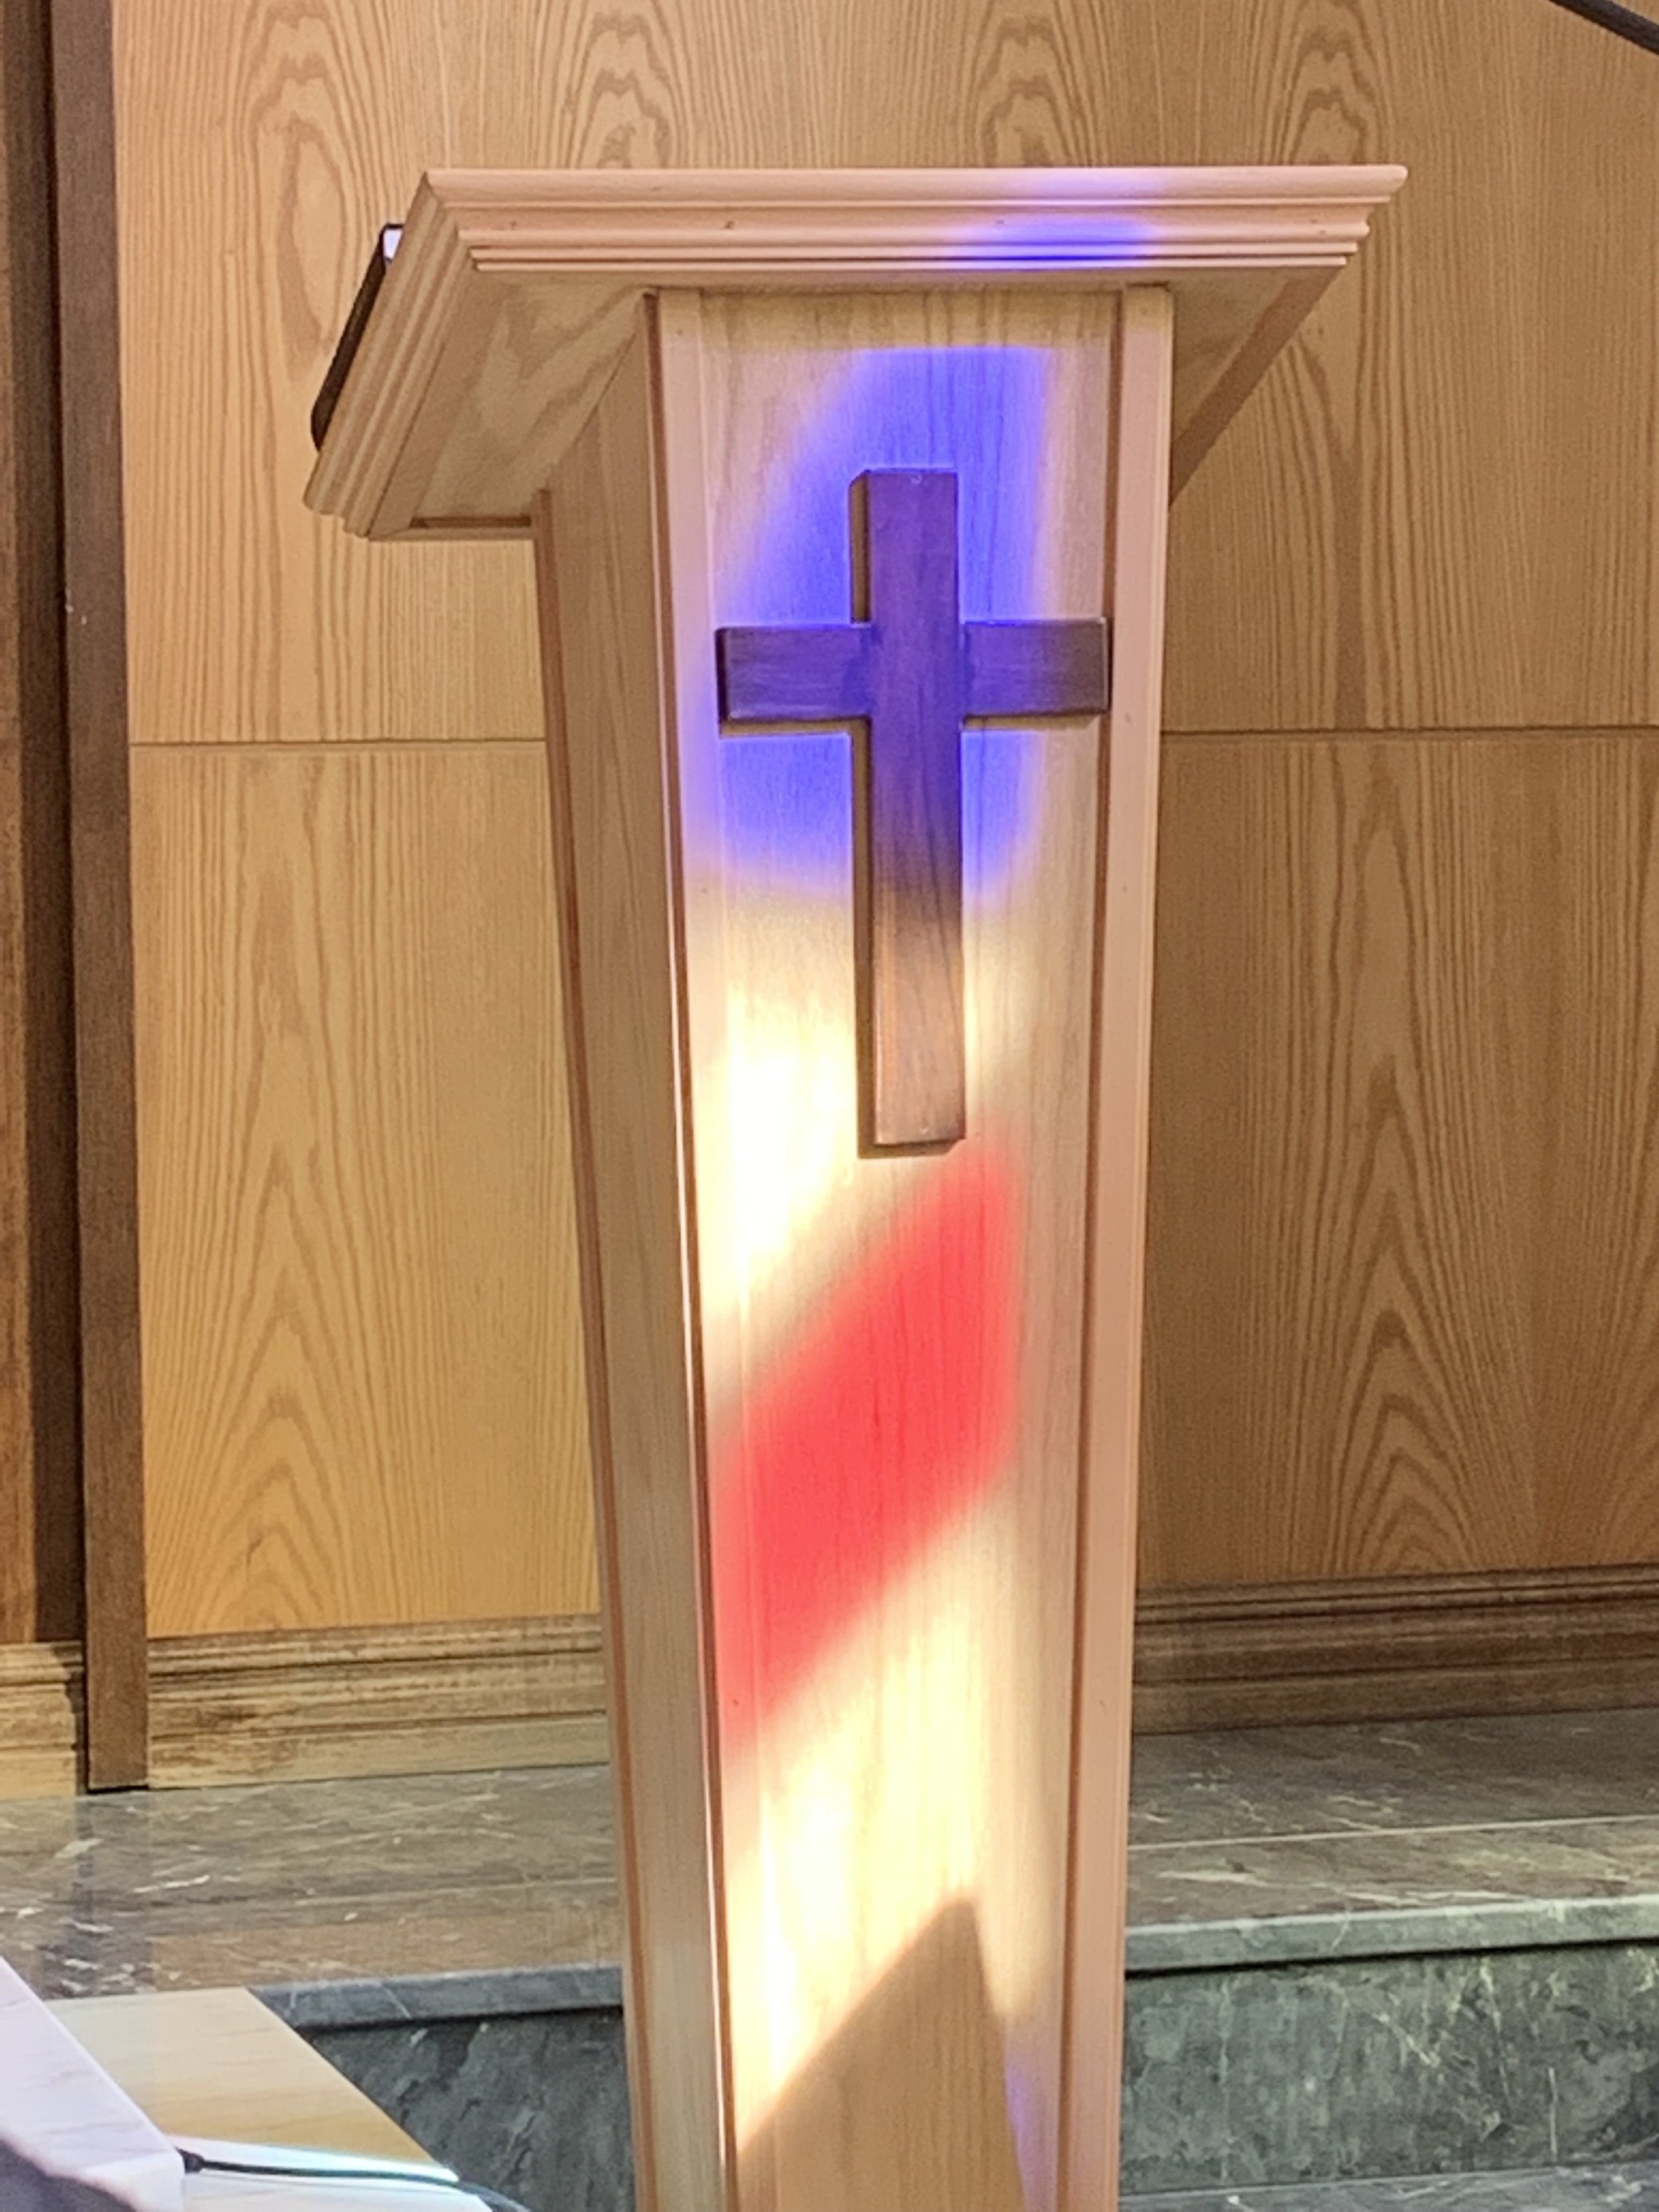  The light illuminates the pulpit to illustrate Rob's message 